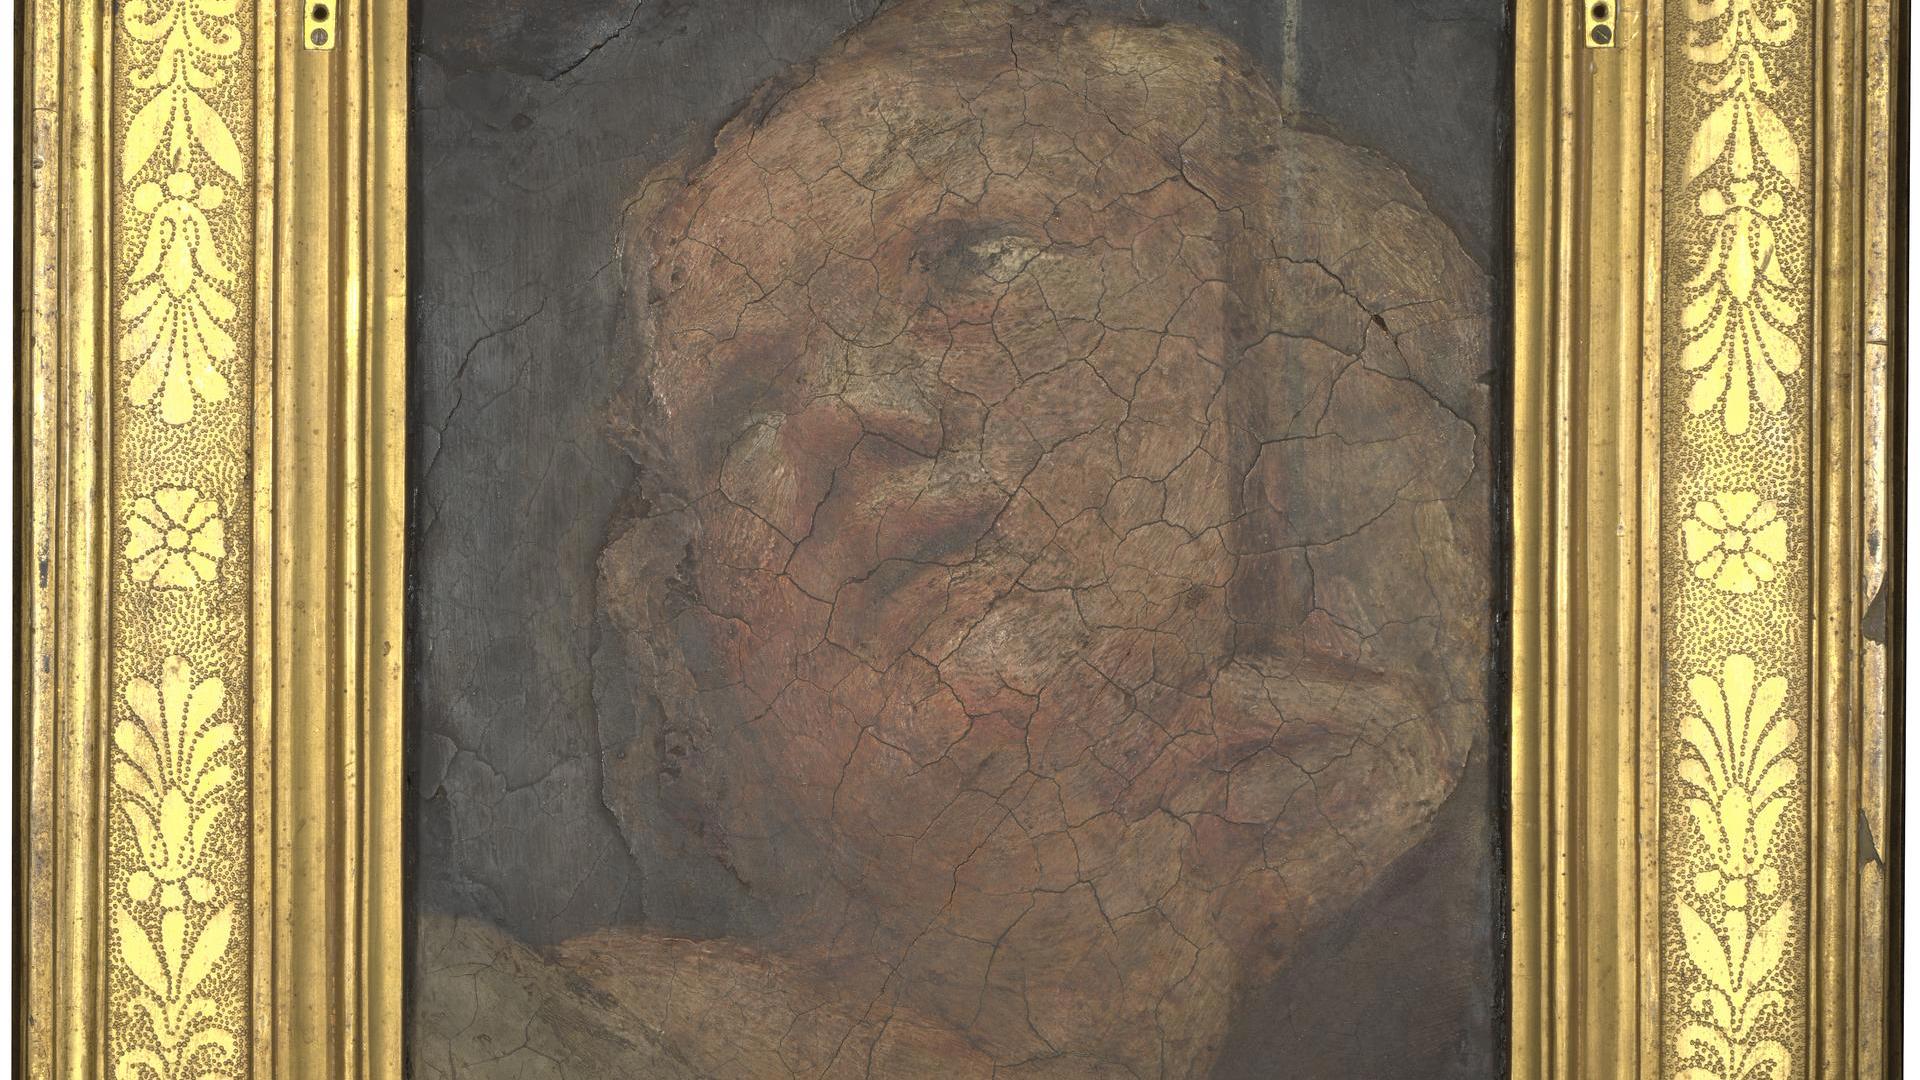 Head of an Angel by Correggio